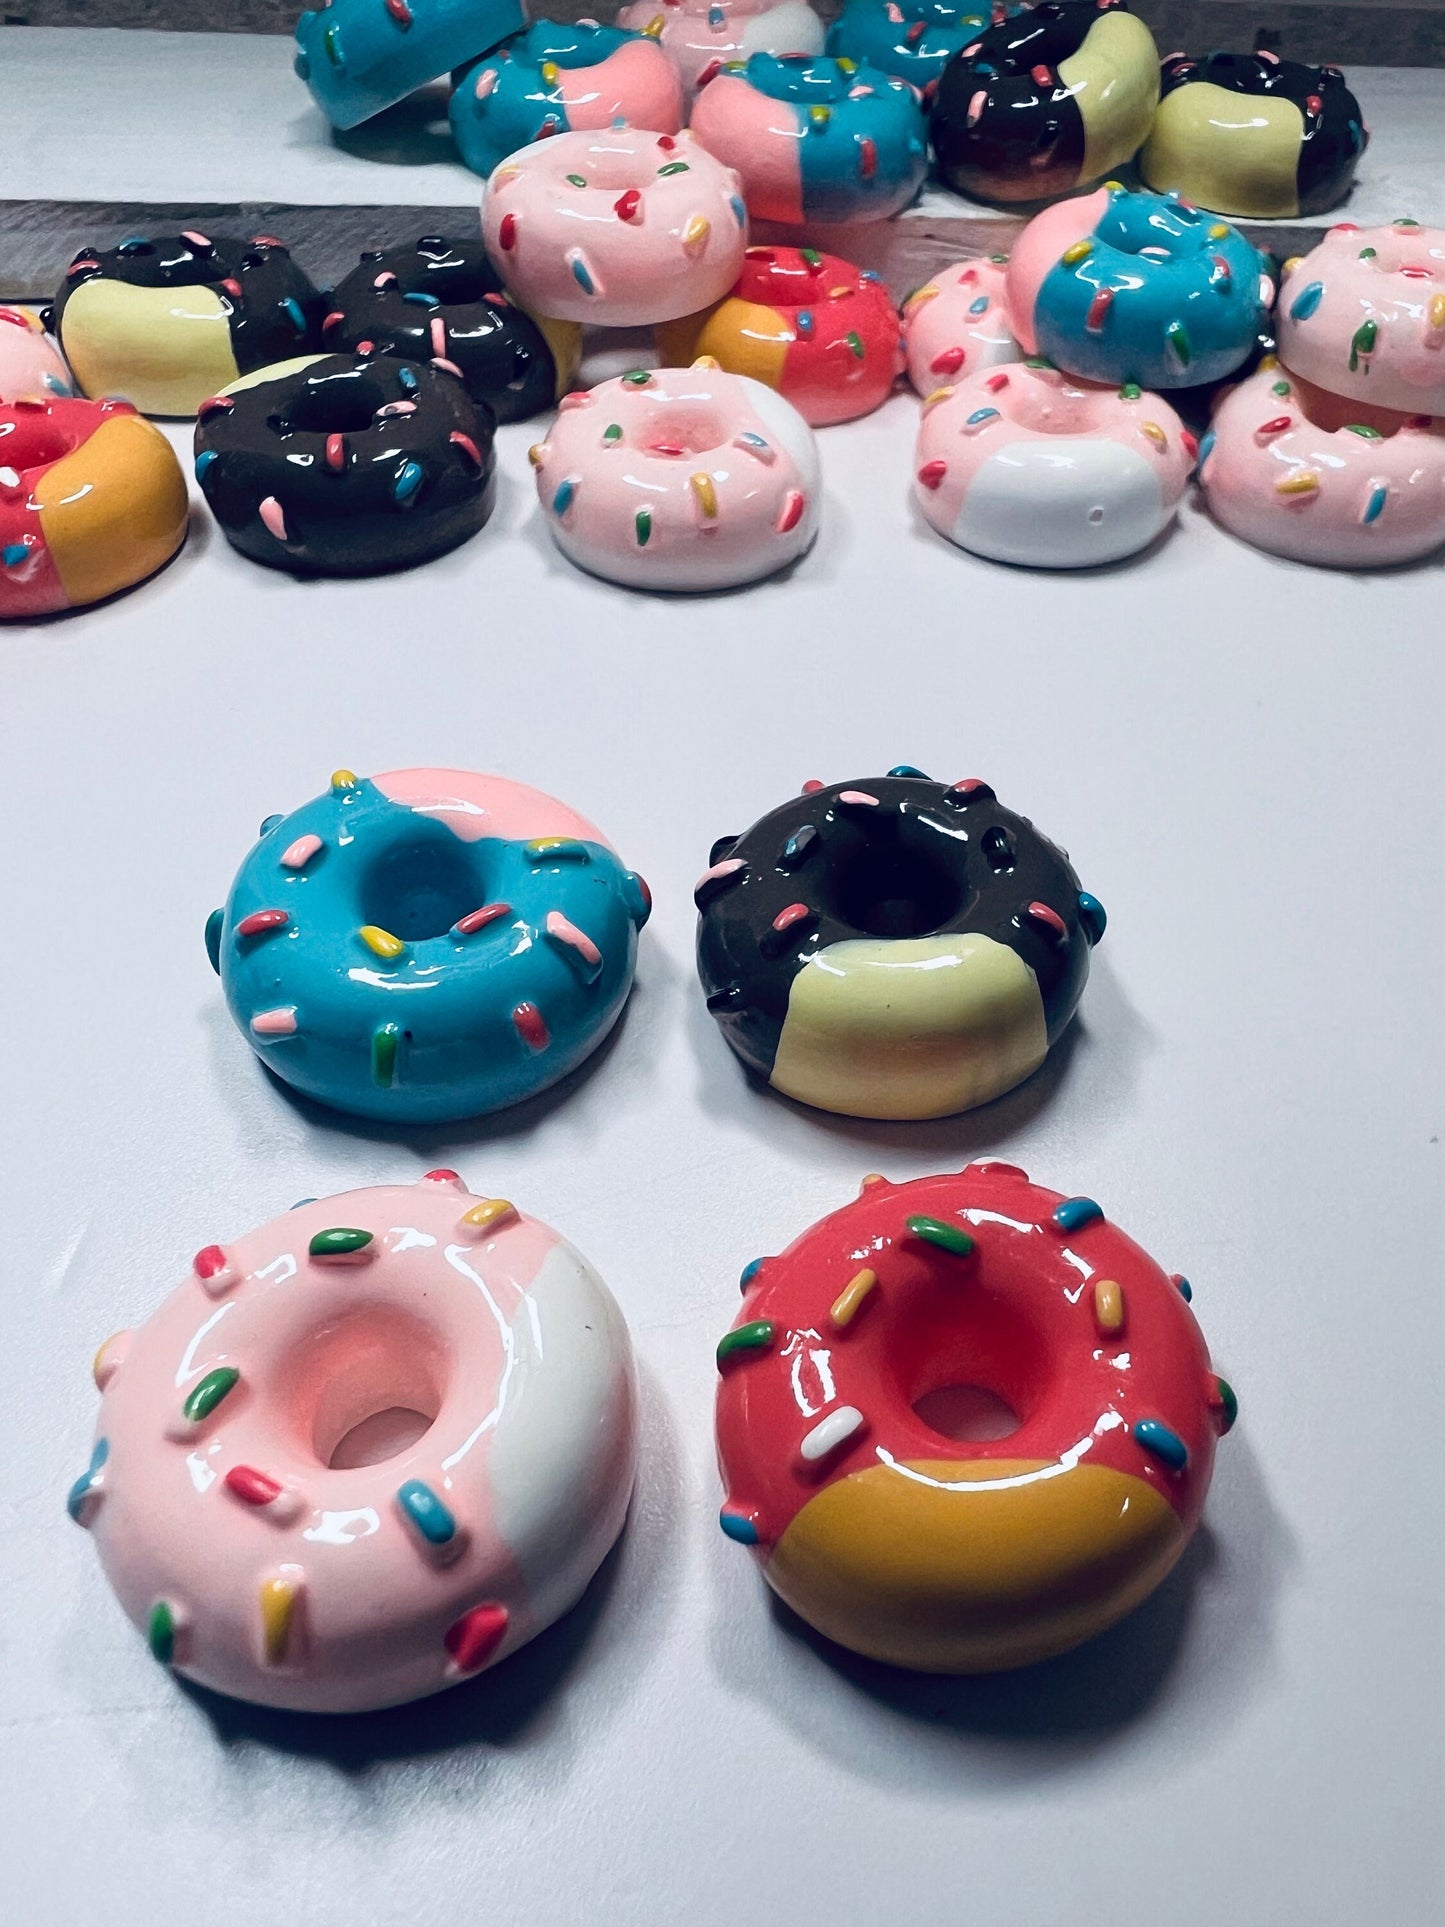 Miniature Donut Trinket-Baking Trinkets-Doughnut Mini Object-Dollhouse Food Miniature Objects -Doodads-Trinkets